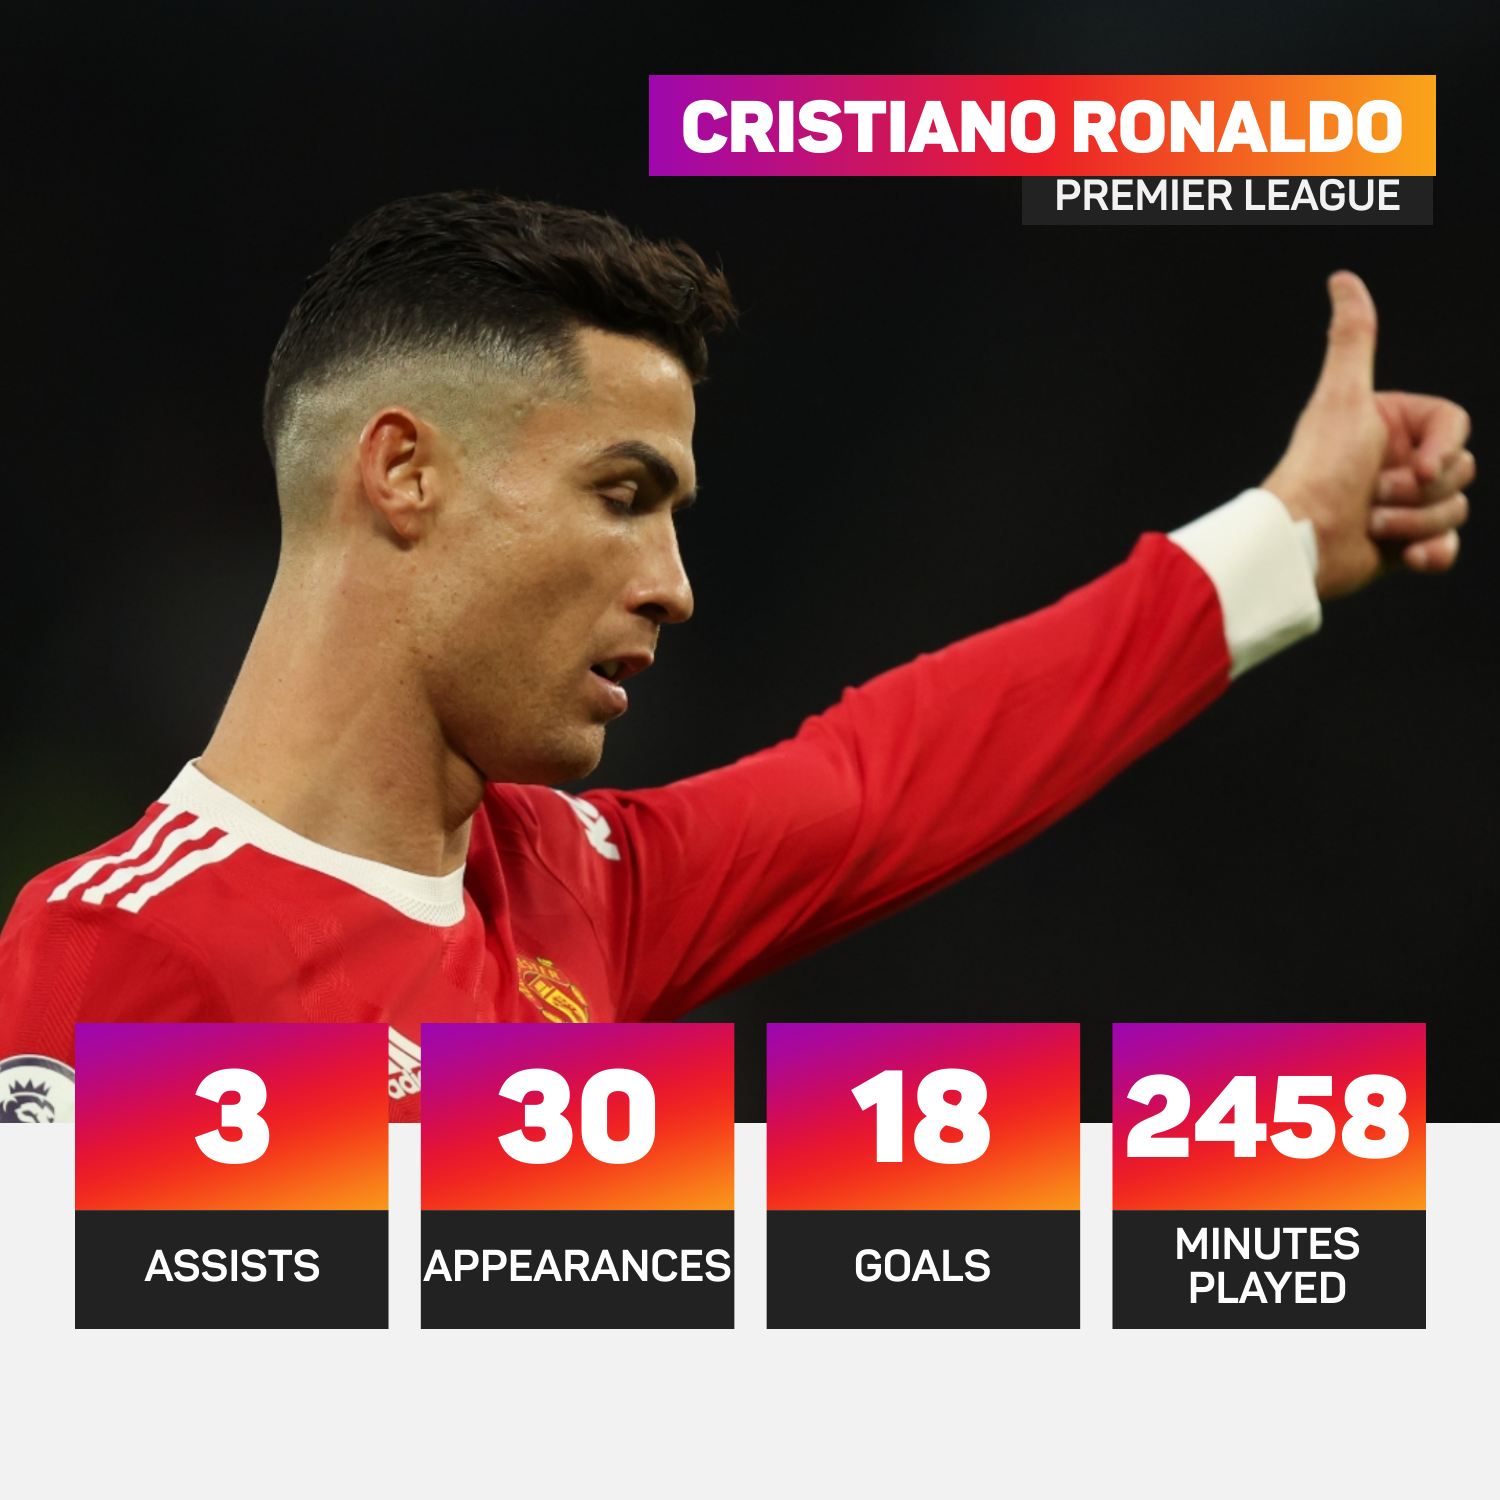 Cristiano Ronaldo scored 18 Premier League goals in 2021-22